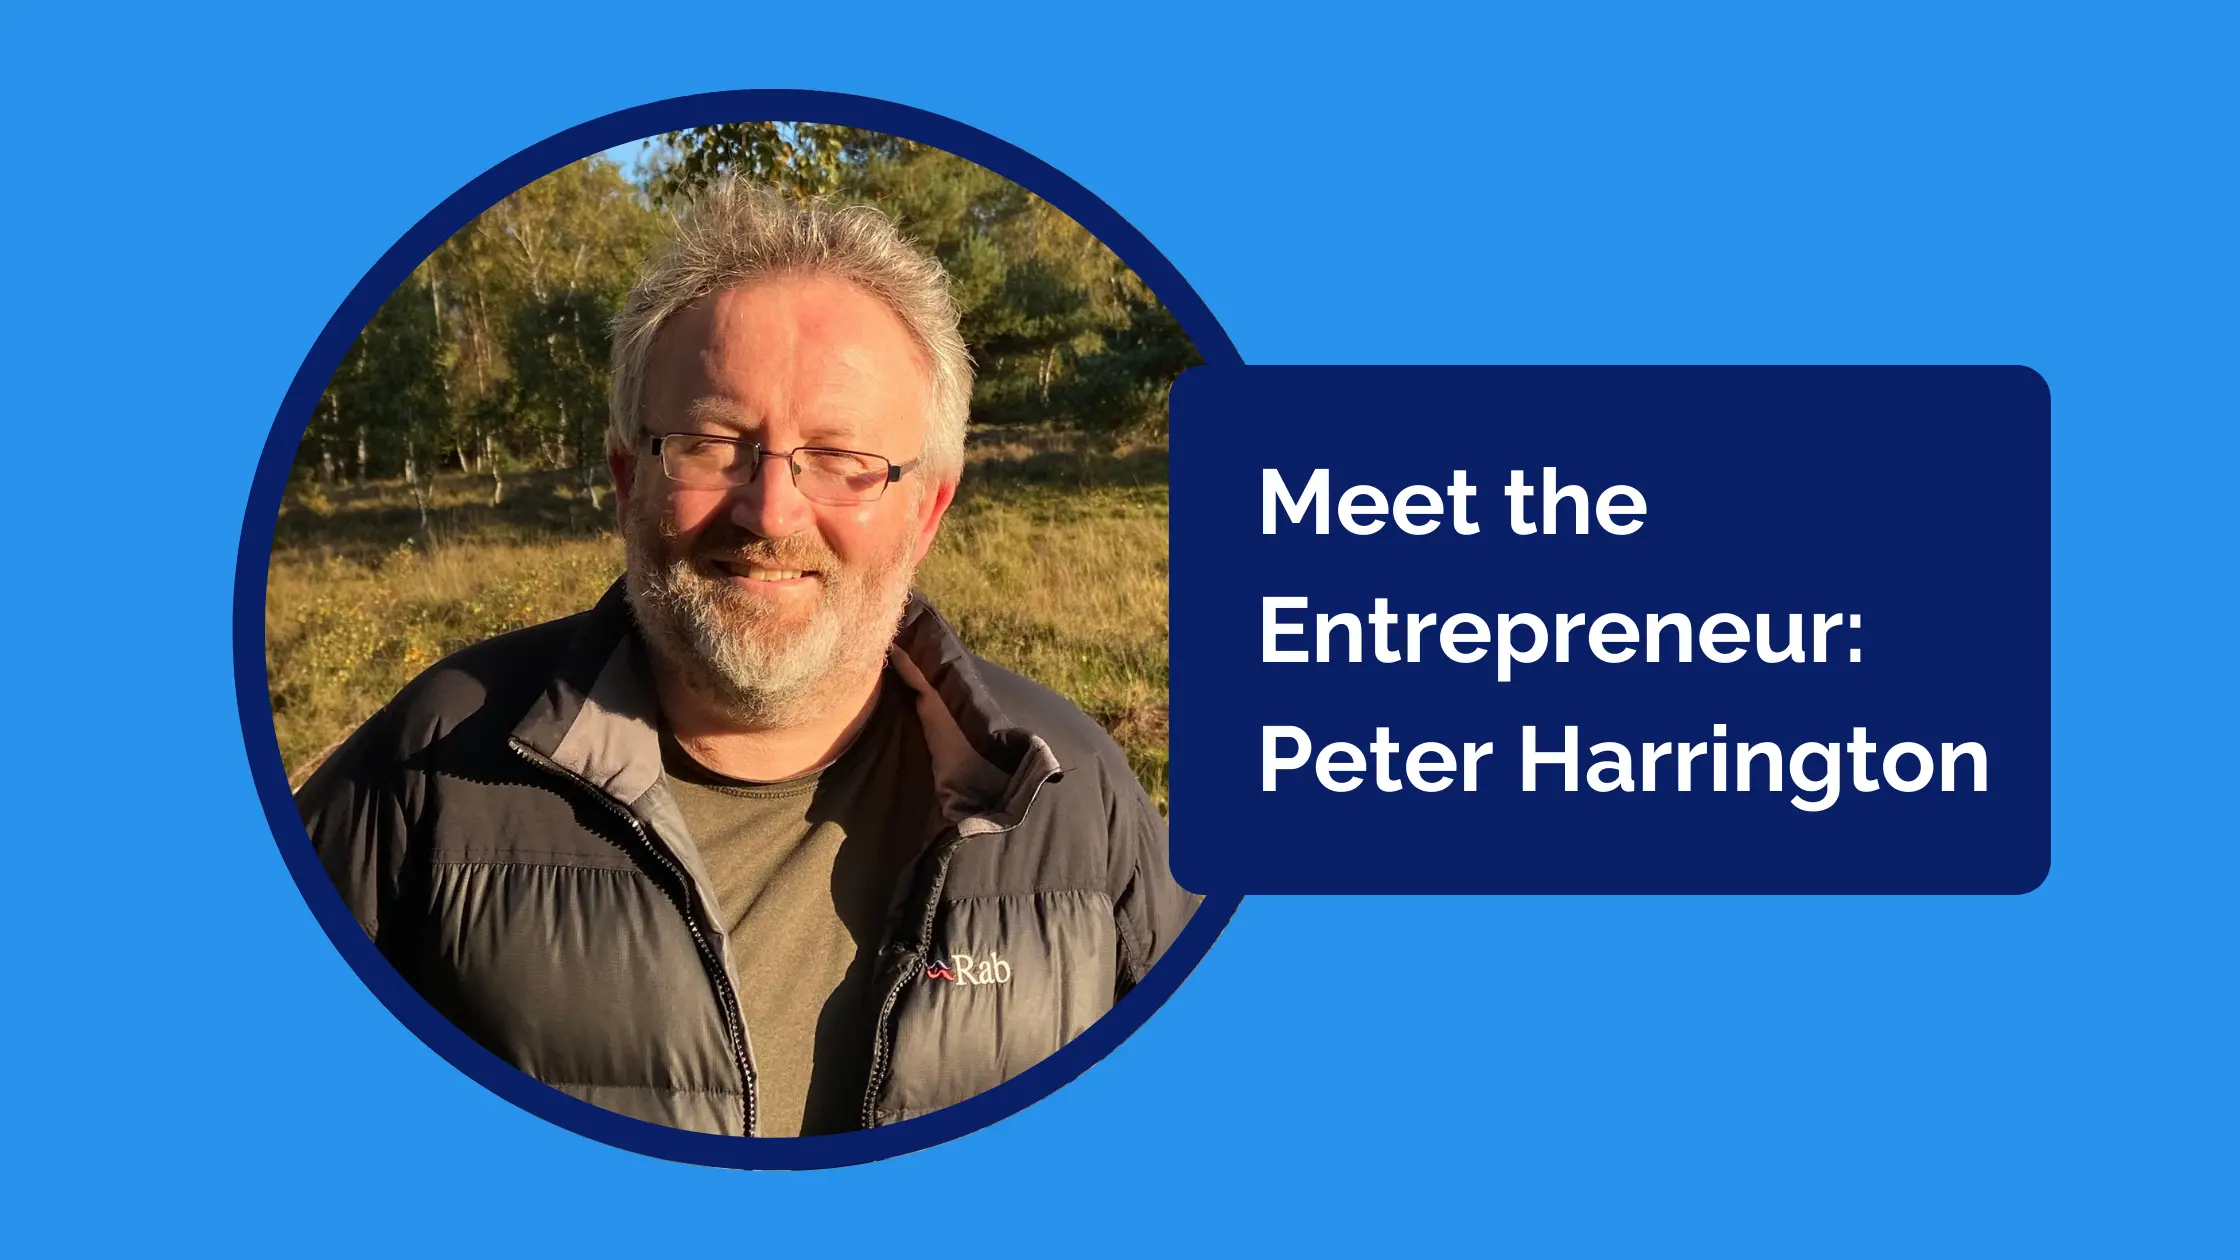 Meet the entrepreneur and co-founder behind SimVenture, Peter Harrington.